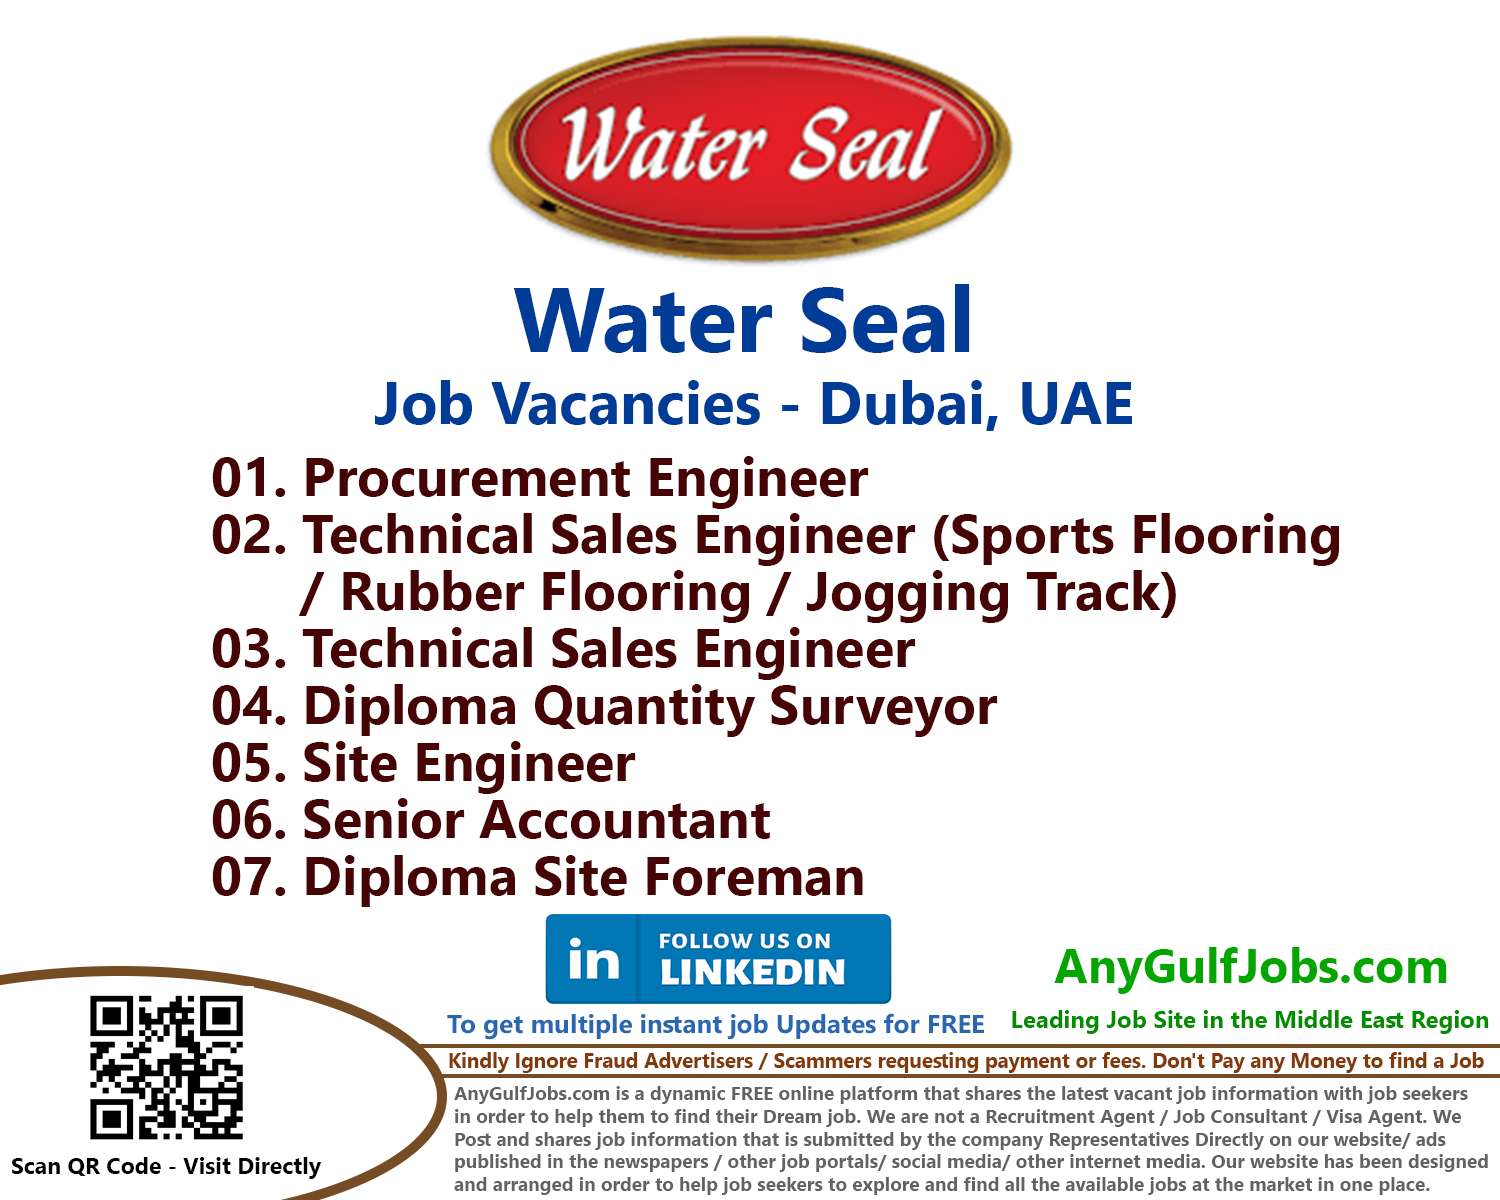 Water Seal Vacancies - United Arab Emirates